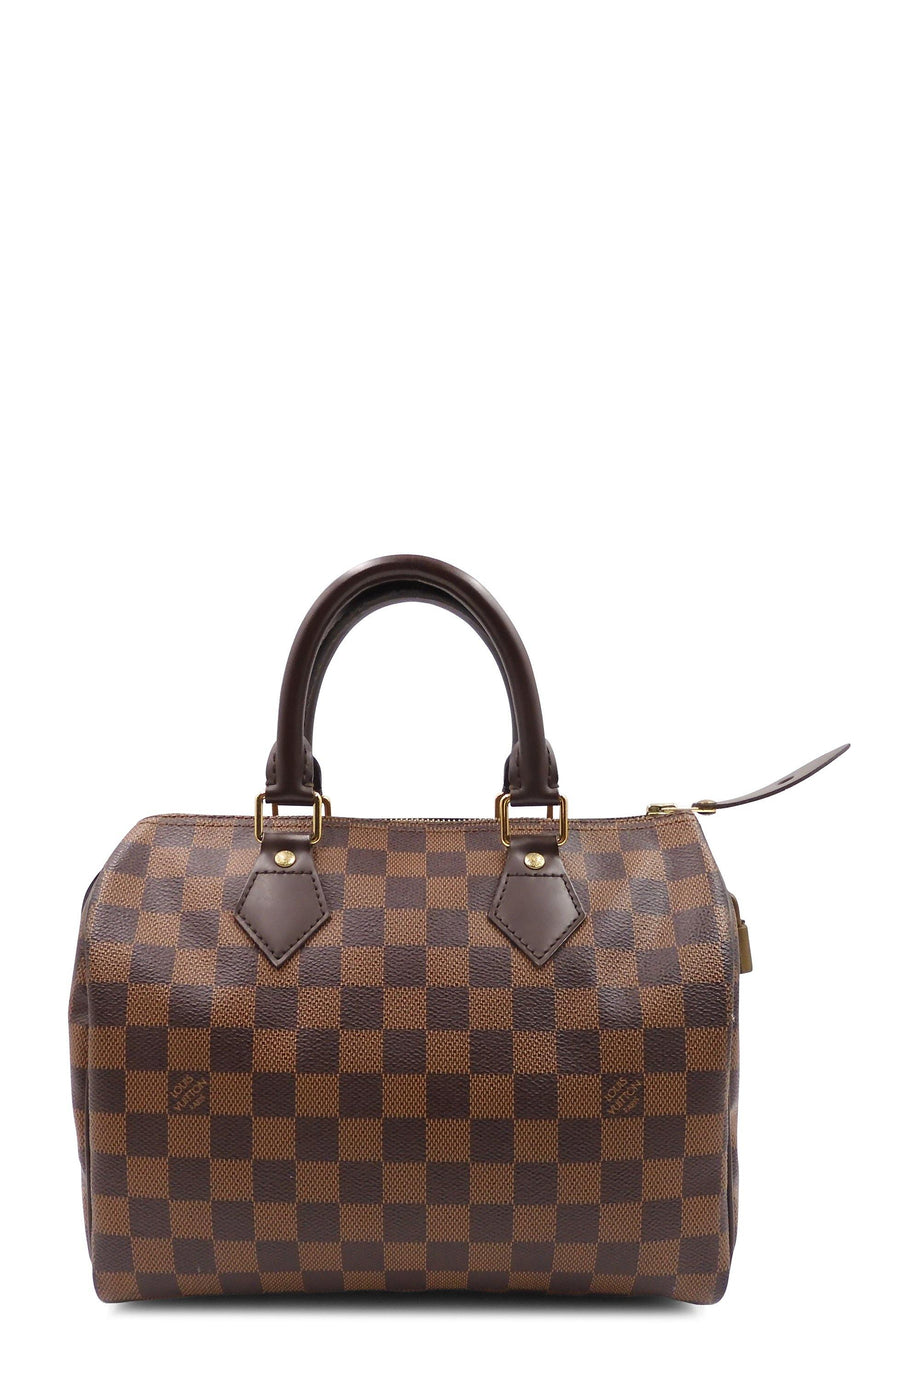 Buy Authentic, Preloved Louis Vuitton Damier Ebene Speedy 25 Bags